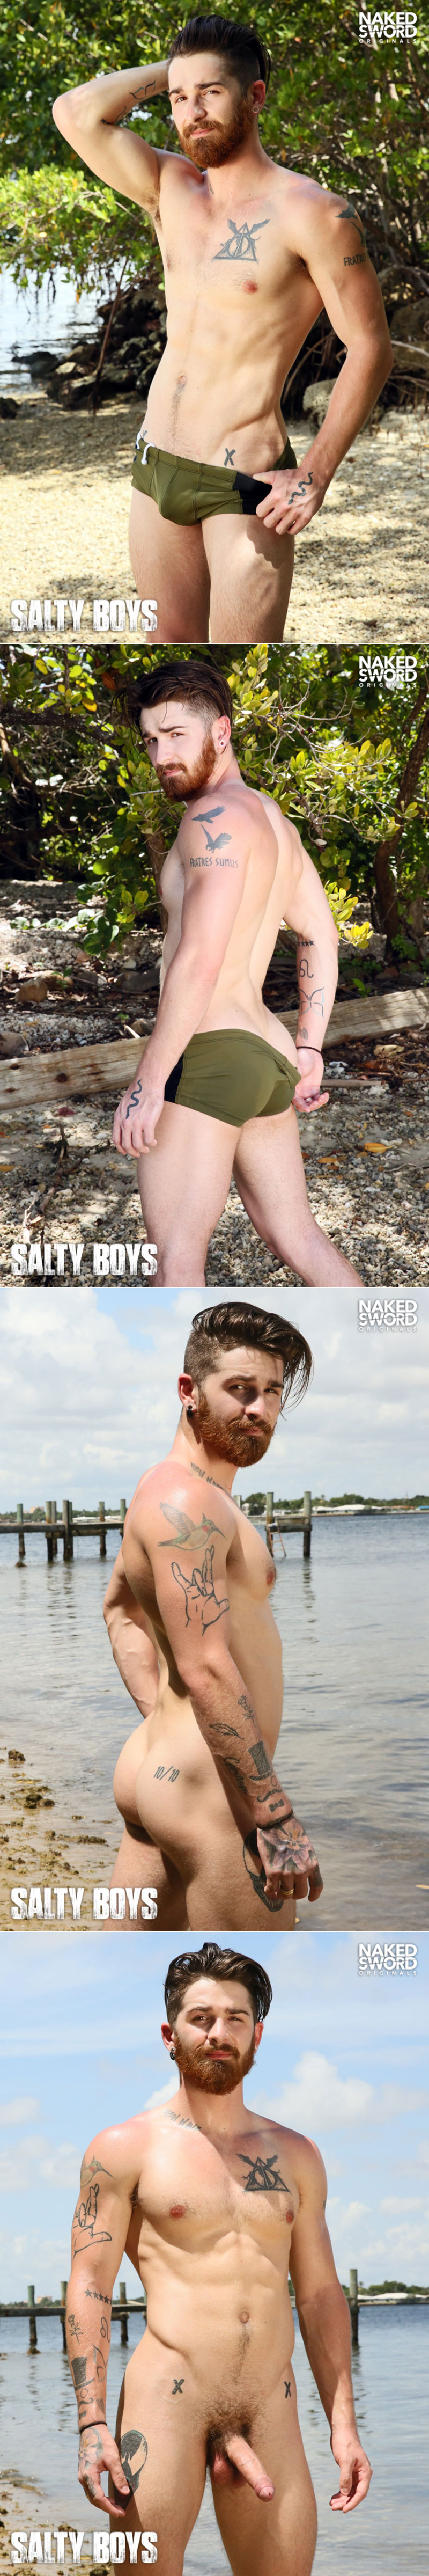 NakedSword Originals: Cesar Rossi fucks Nick Milani bareback in "Salty Boys"